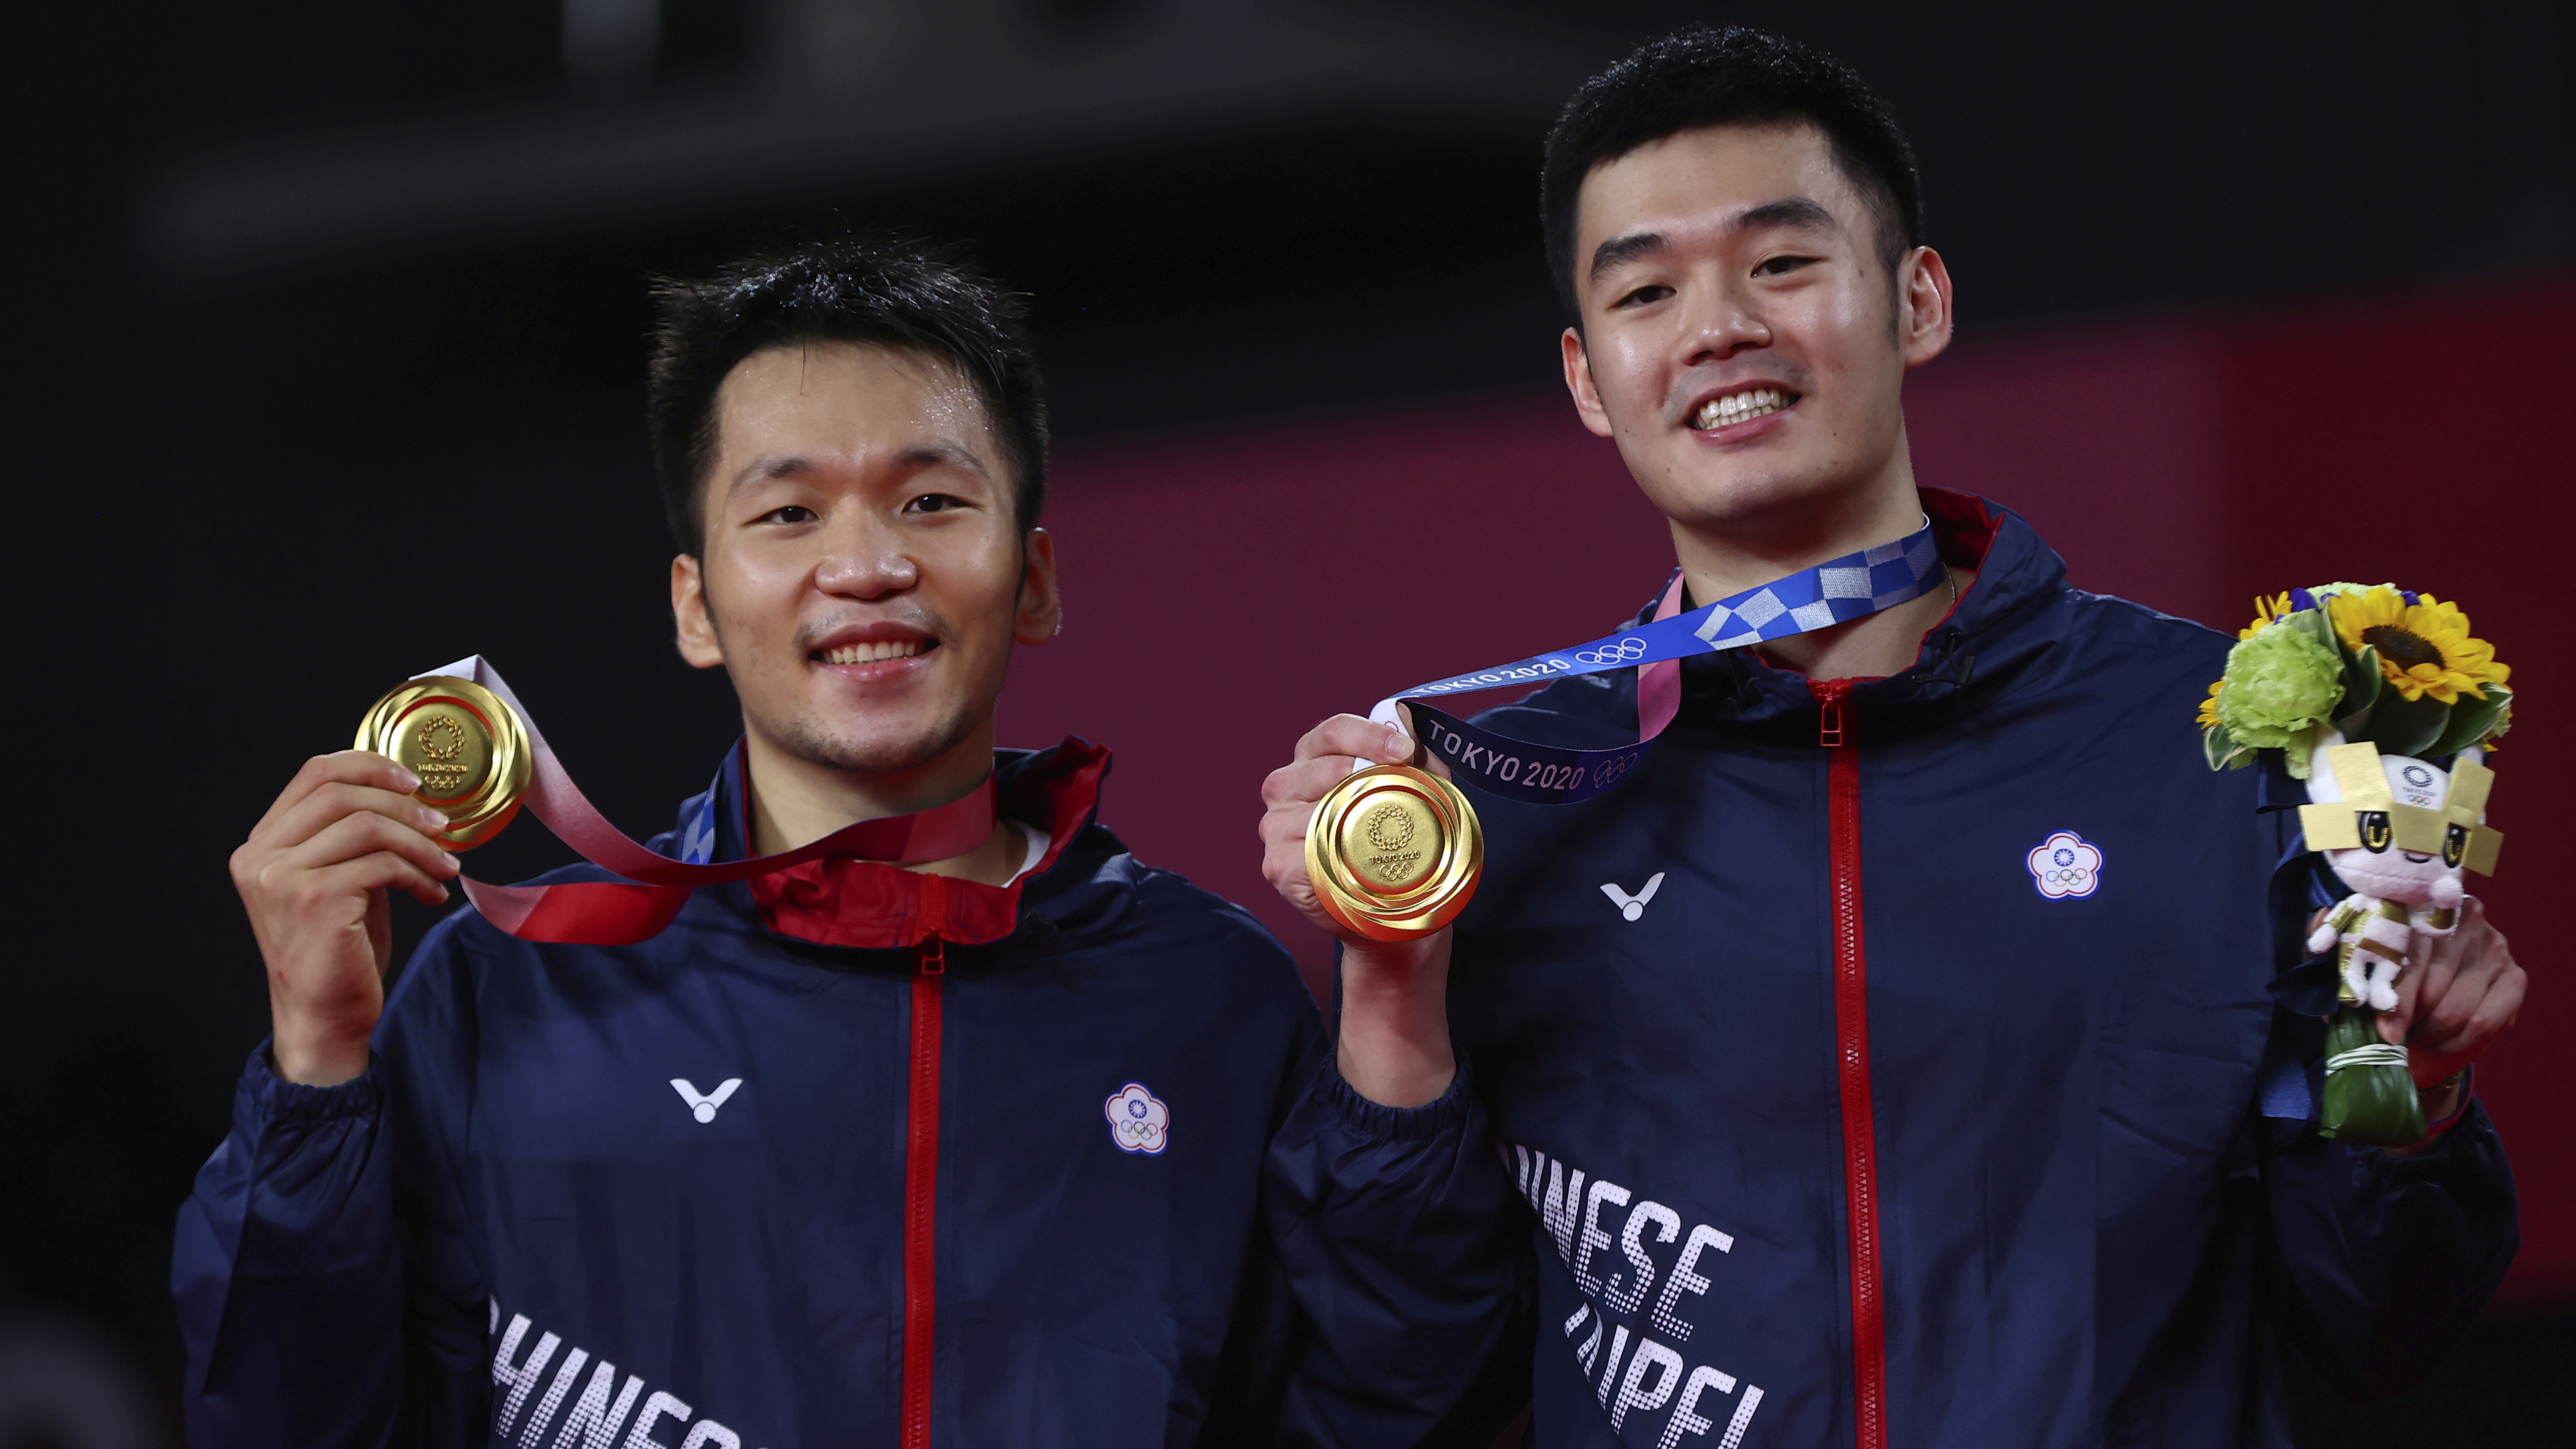 Badminton - Men's Doubles - Medal Ceremony